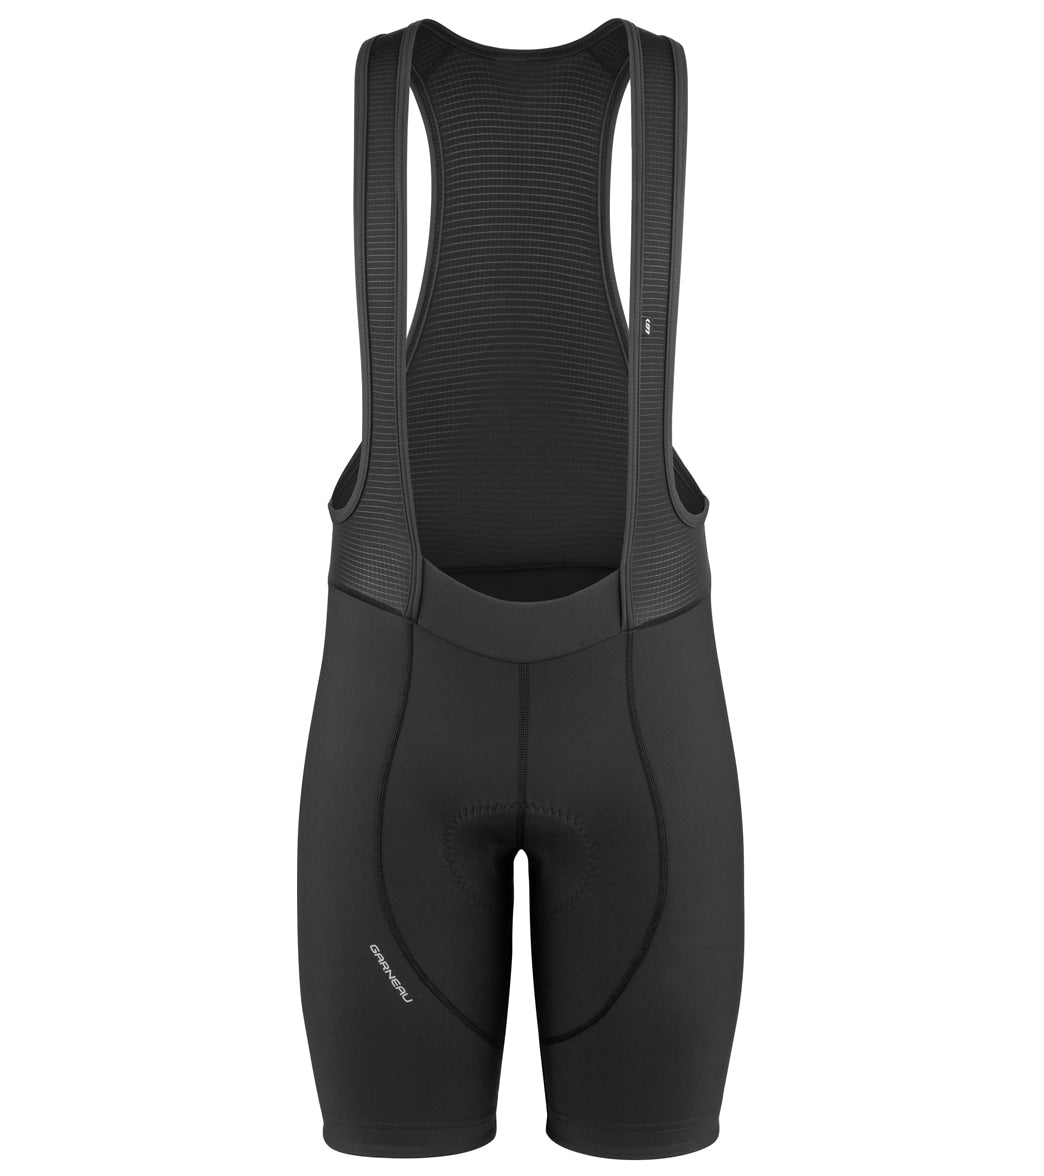 Louis Garneau Men's Fit Sensor 3 Cycling Bib Short - Black Large - Swimoutlet.com